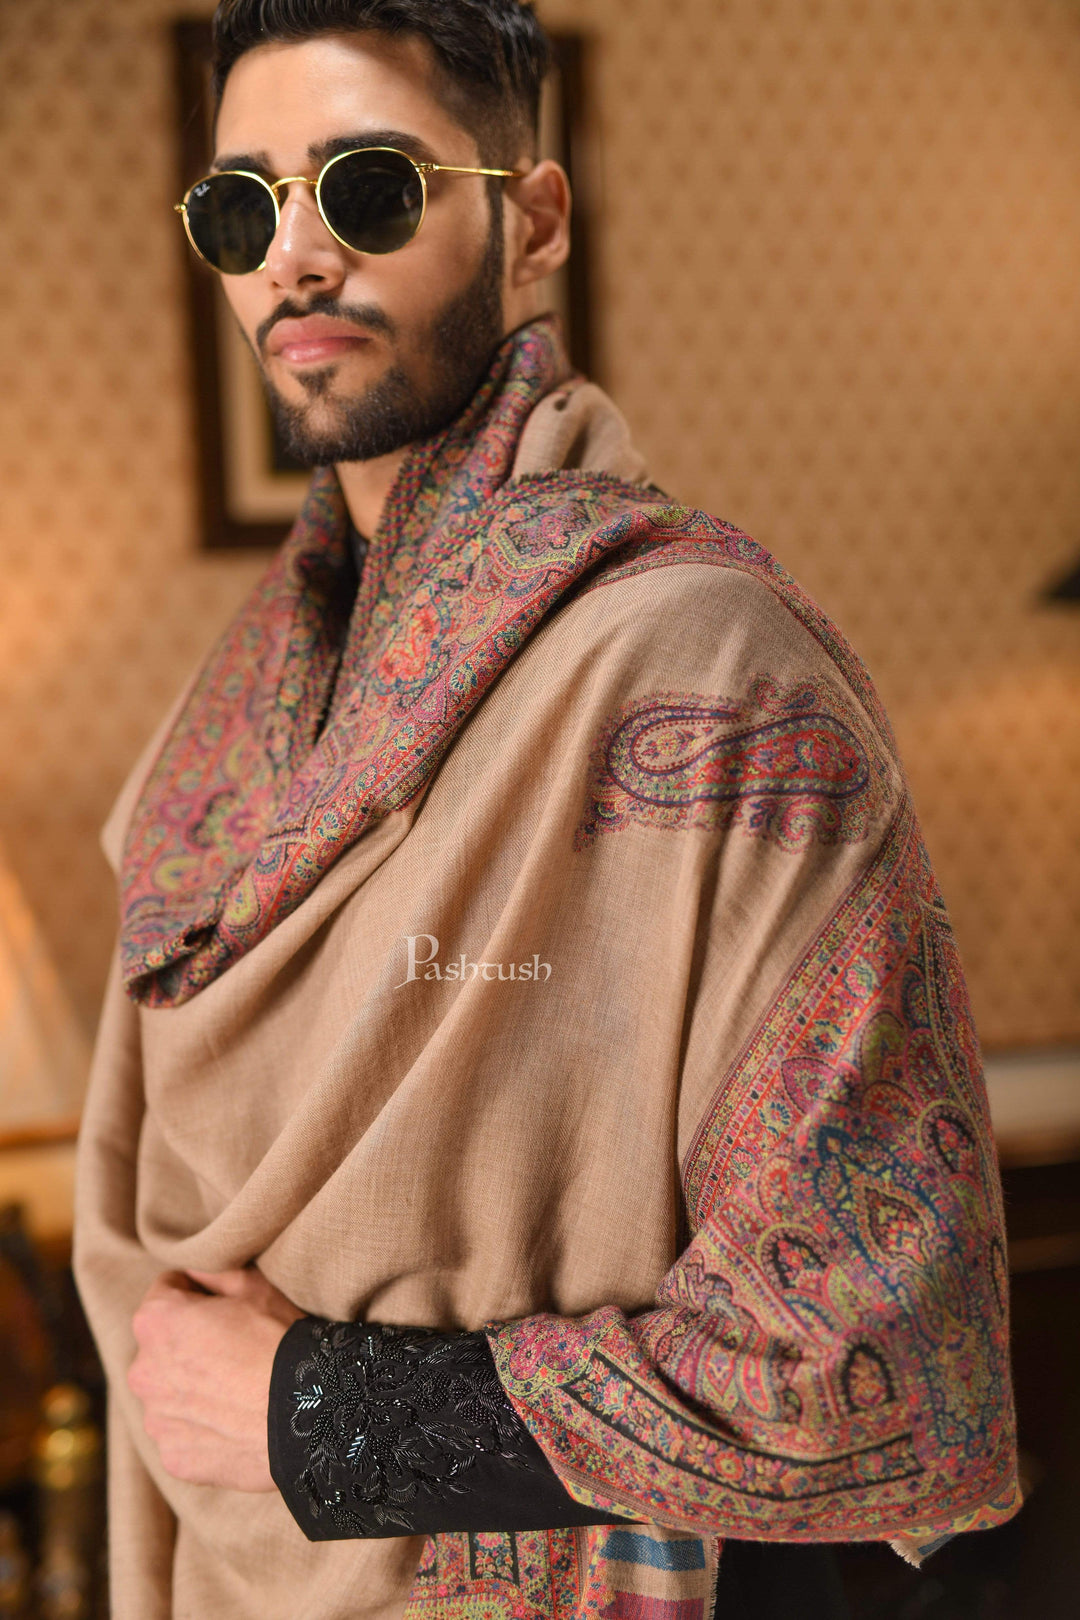 Pashtush India 127x254 Pashtush Mens Black Shawl, With Palle-dar Ethnic Weave, Fine Wool, Full Size